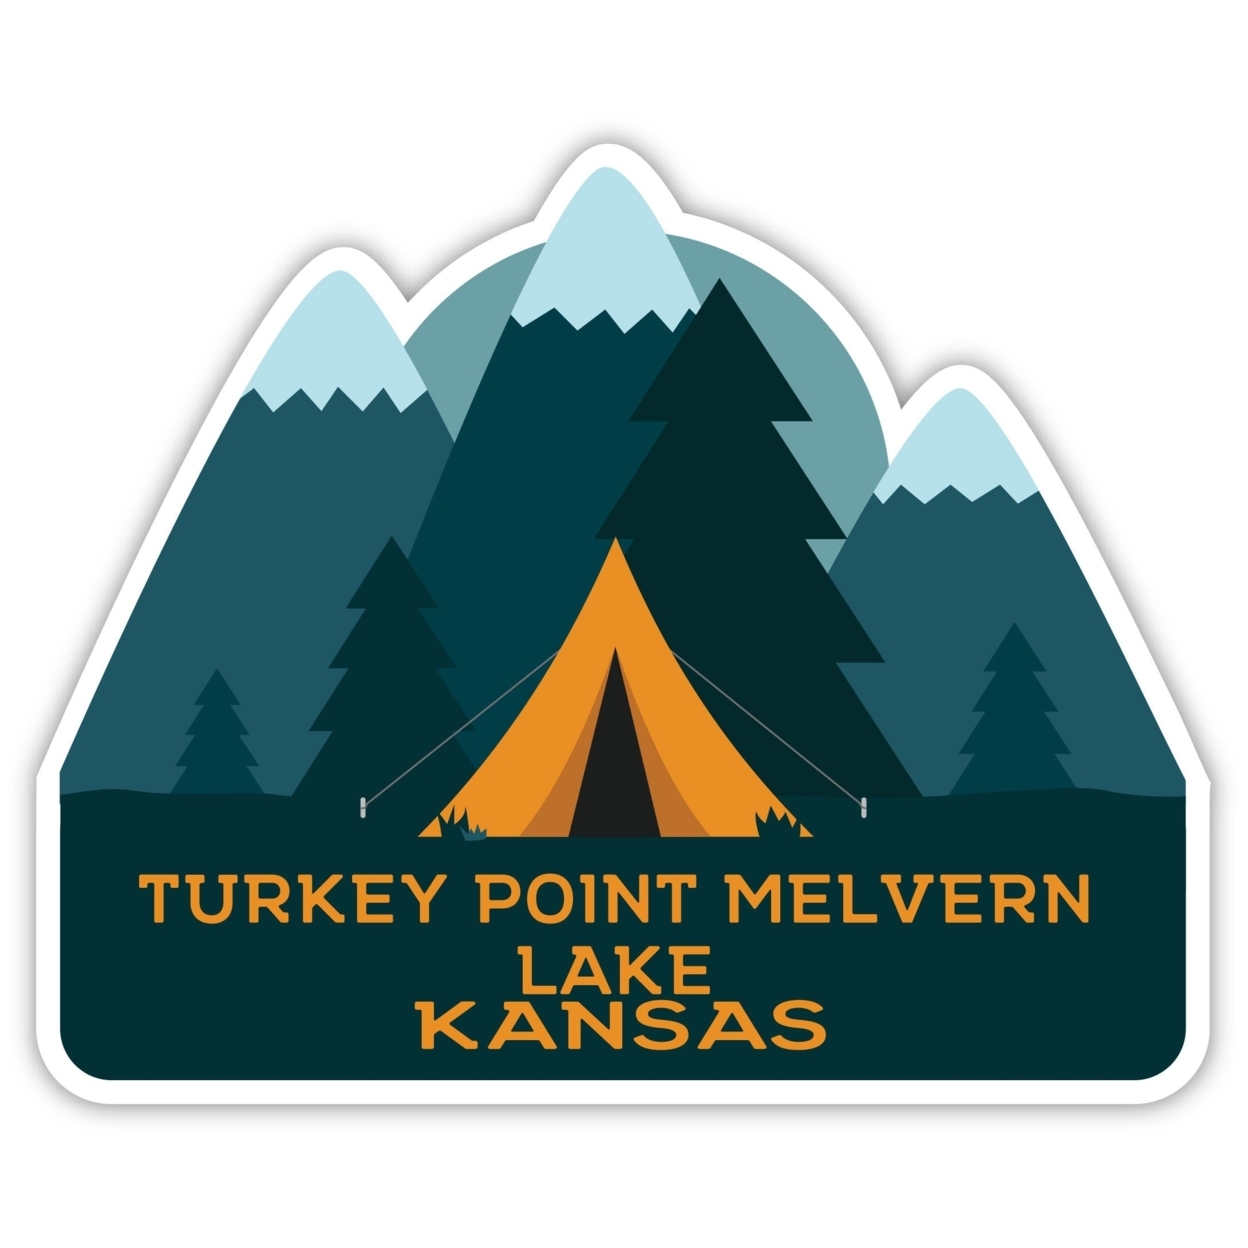 Turkey Point Melvern Lake Kansas Souvenir Decorative Stickers (Choose Theme And Size) - Single Unit, 4-Inch, Tent